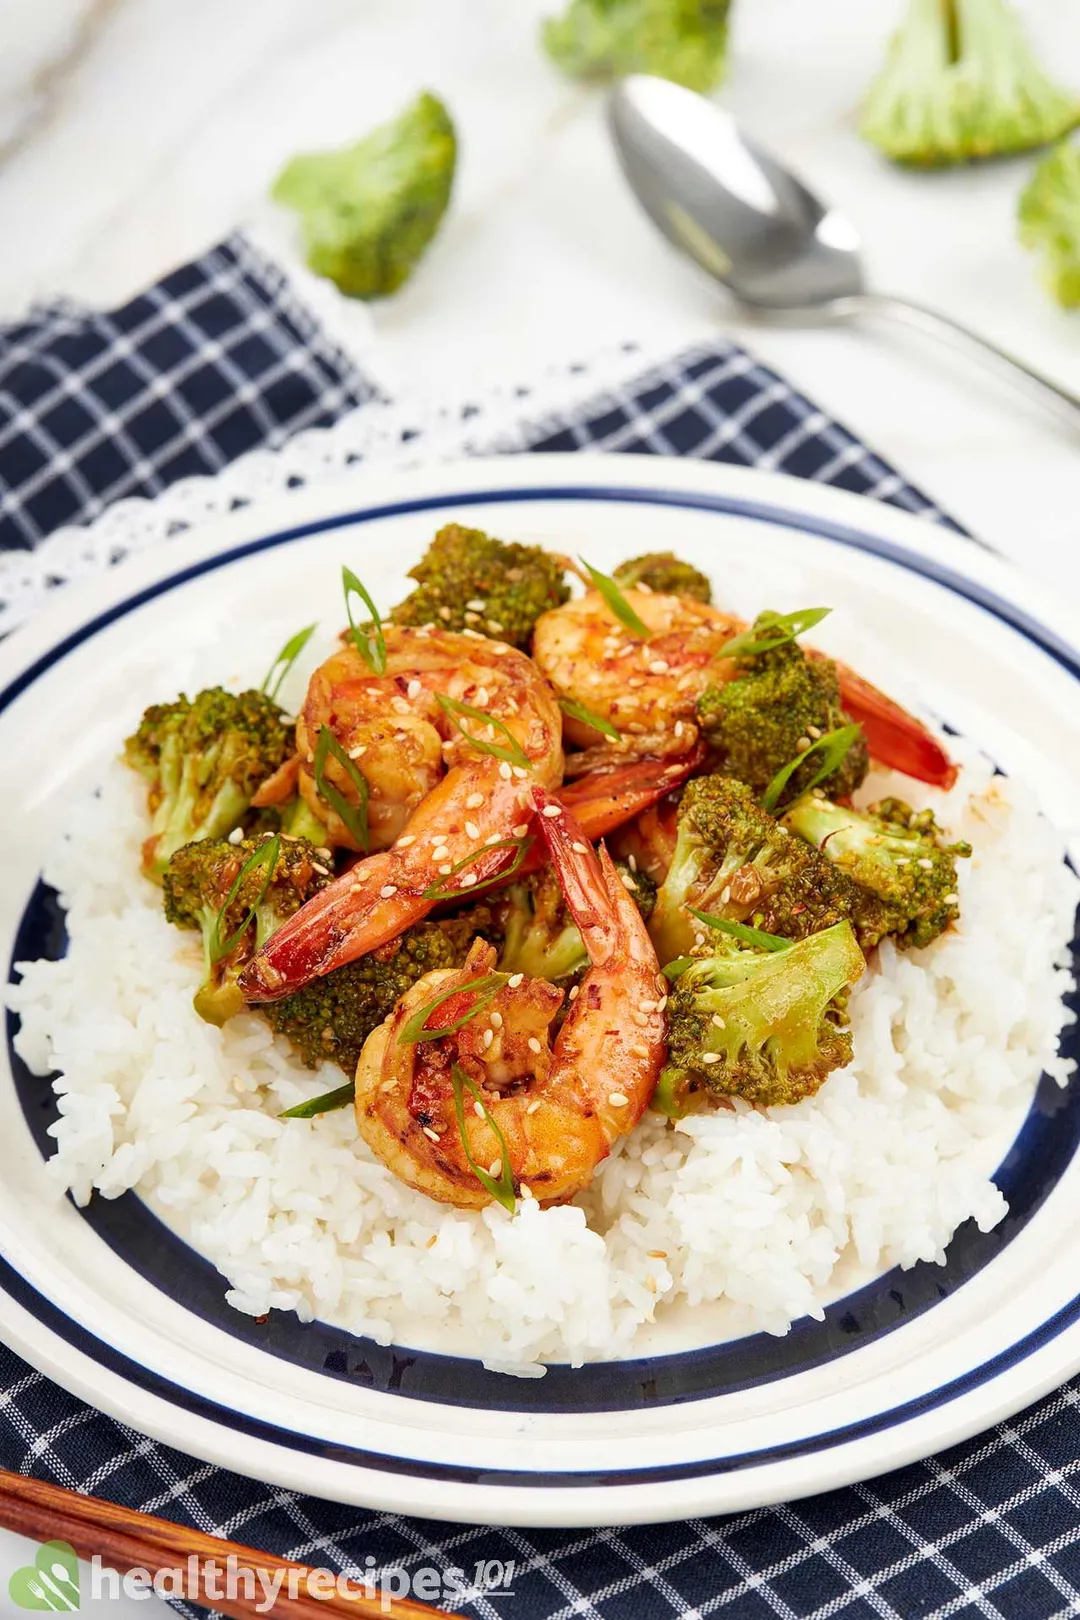 Shrimp and Broccoli Ingredients